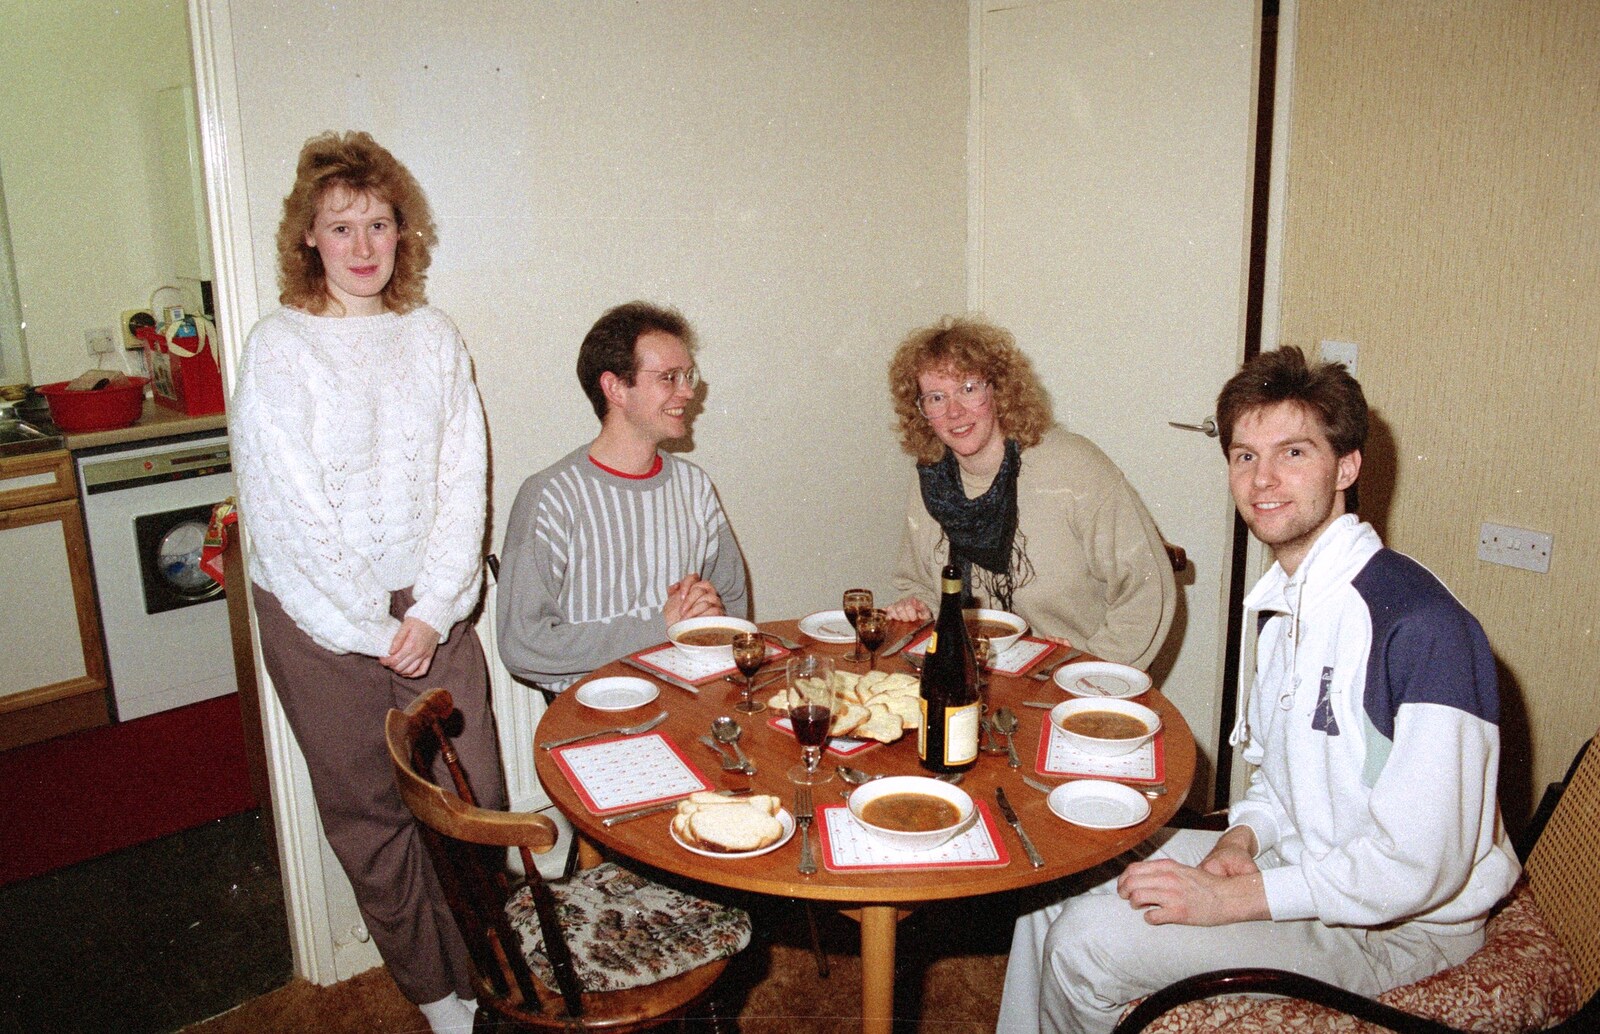 Barton-on-Sea and Farnborough Miscellany, Hampshire - 11th April 1989: Maria, Phil, Liz and Sean eat soup